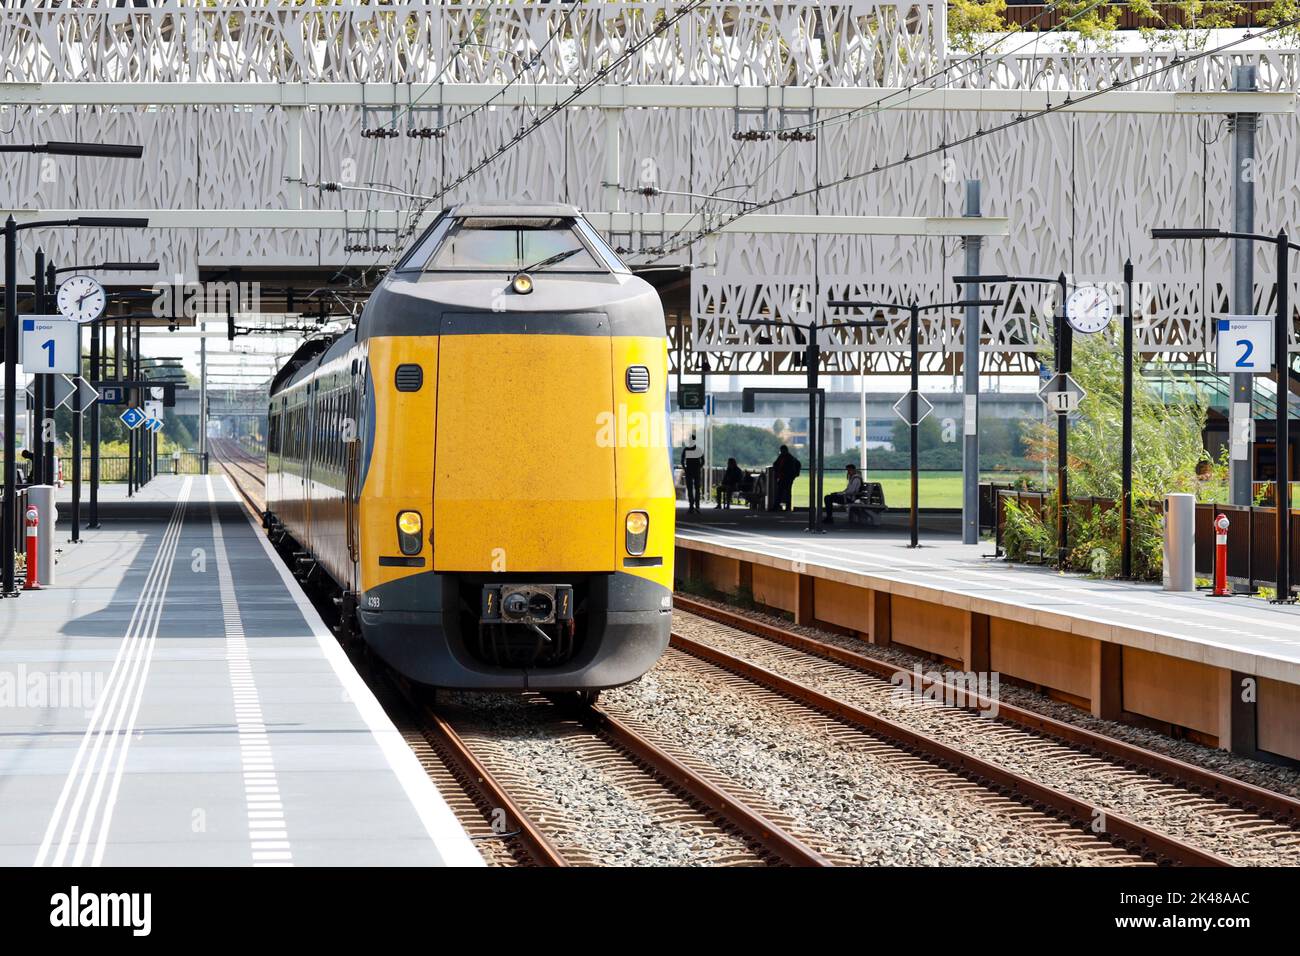 ICM Intercity train called Koploper rushes along platform at station Lansingerland Zoetermeer in the Netherlands Stock Photo